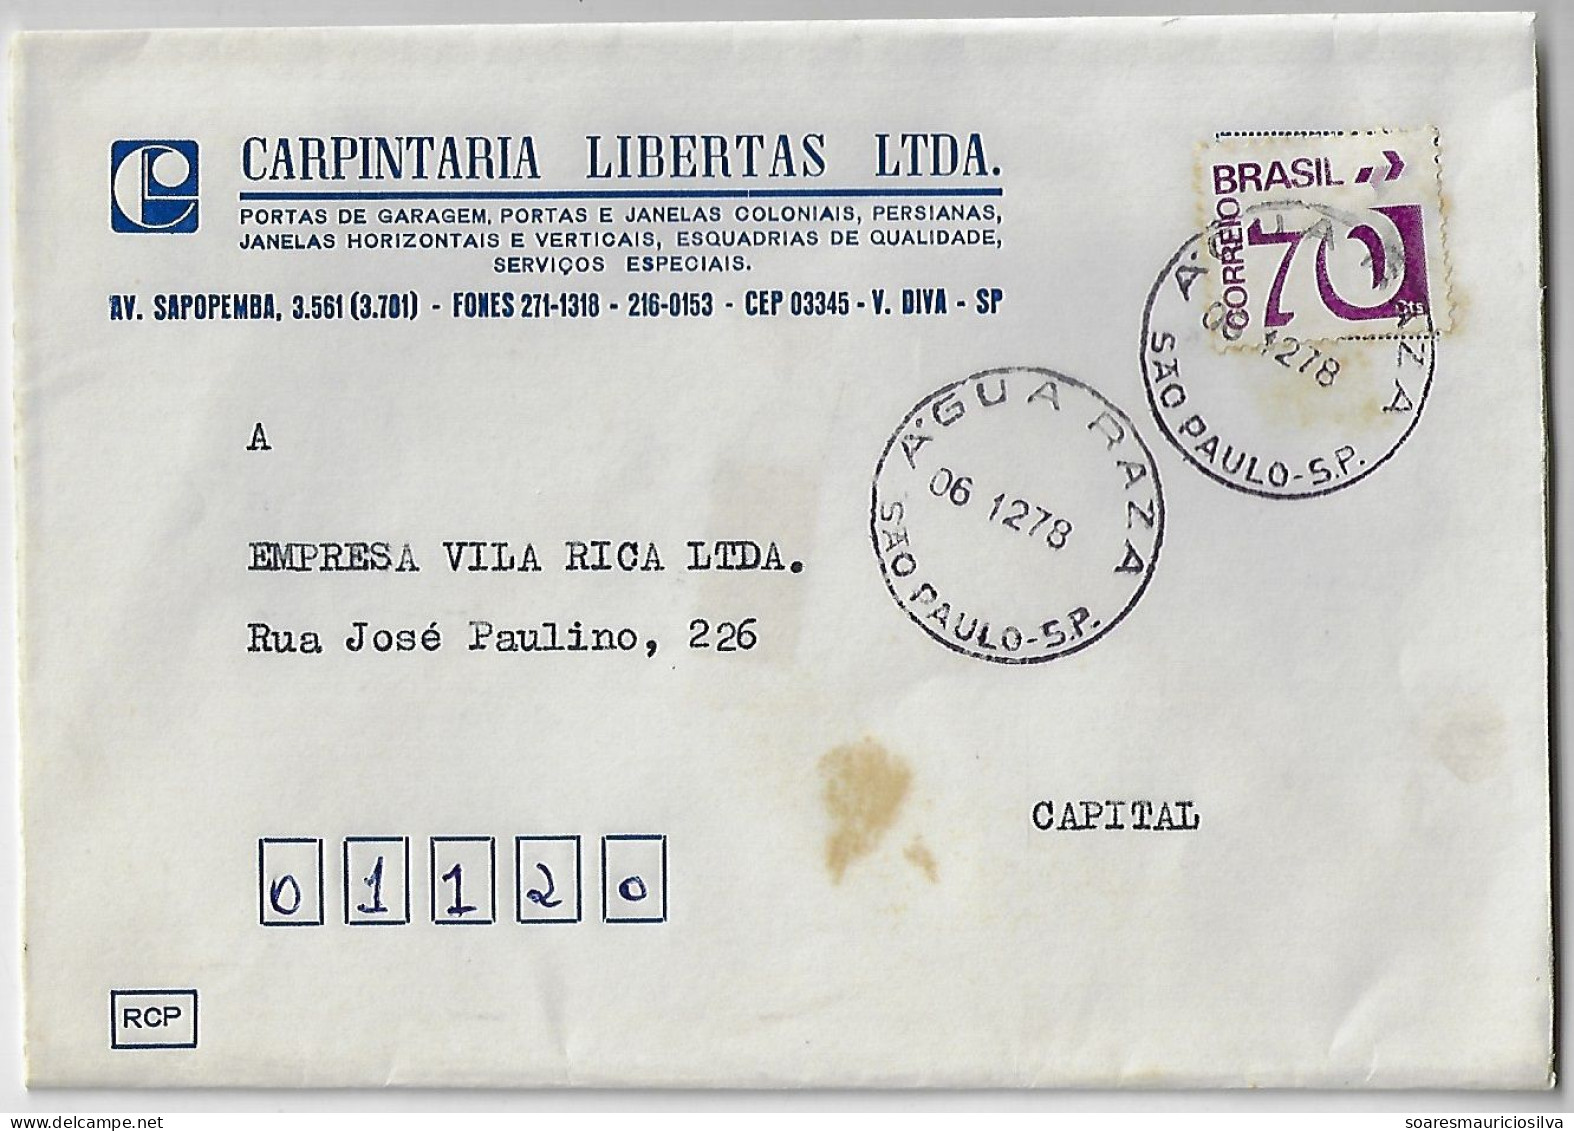 Brazil 1978 Carpentry Libertas Ltd Cover Shipped In São Paulo Agency Água Raza (shallow Water) Definitive Stamp 70 Cents - Briefe U. Dokumente